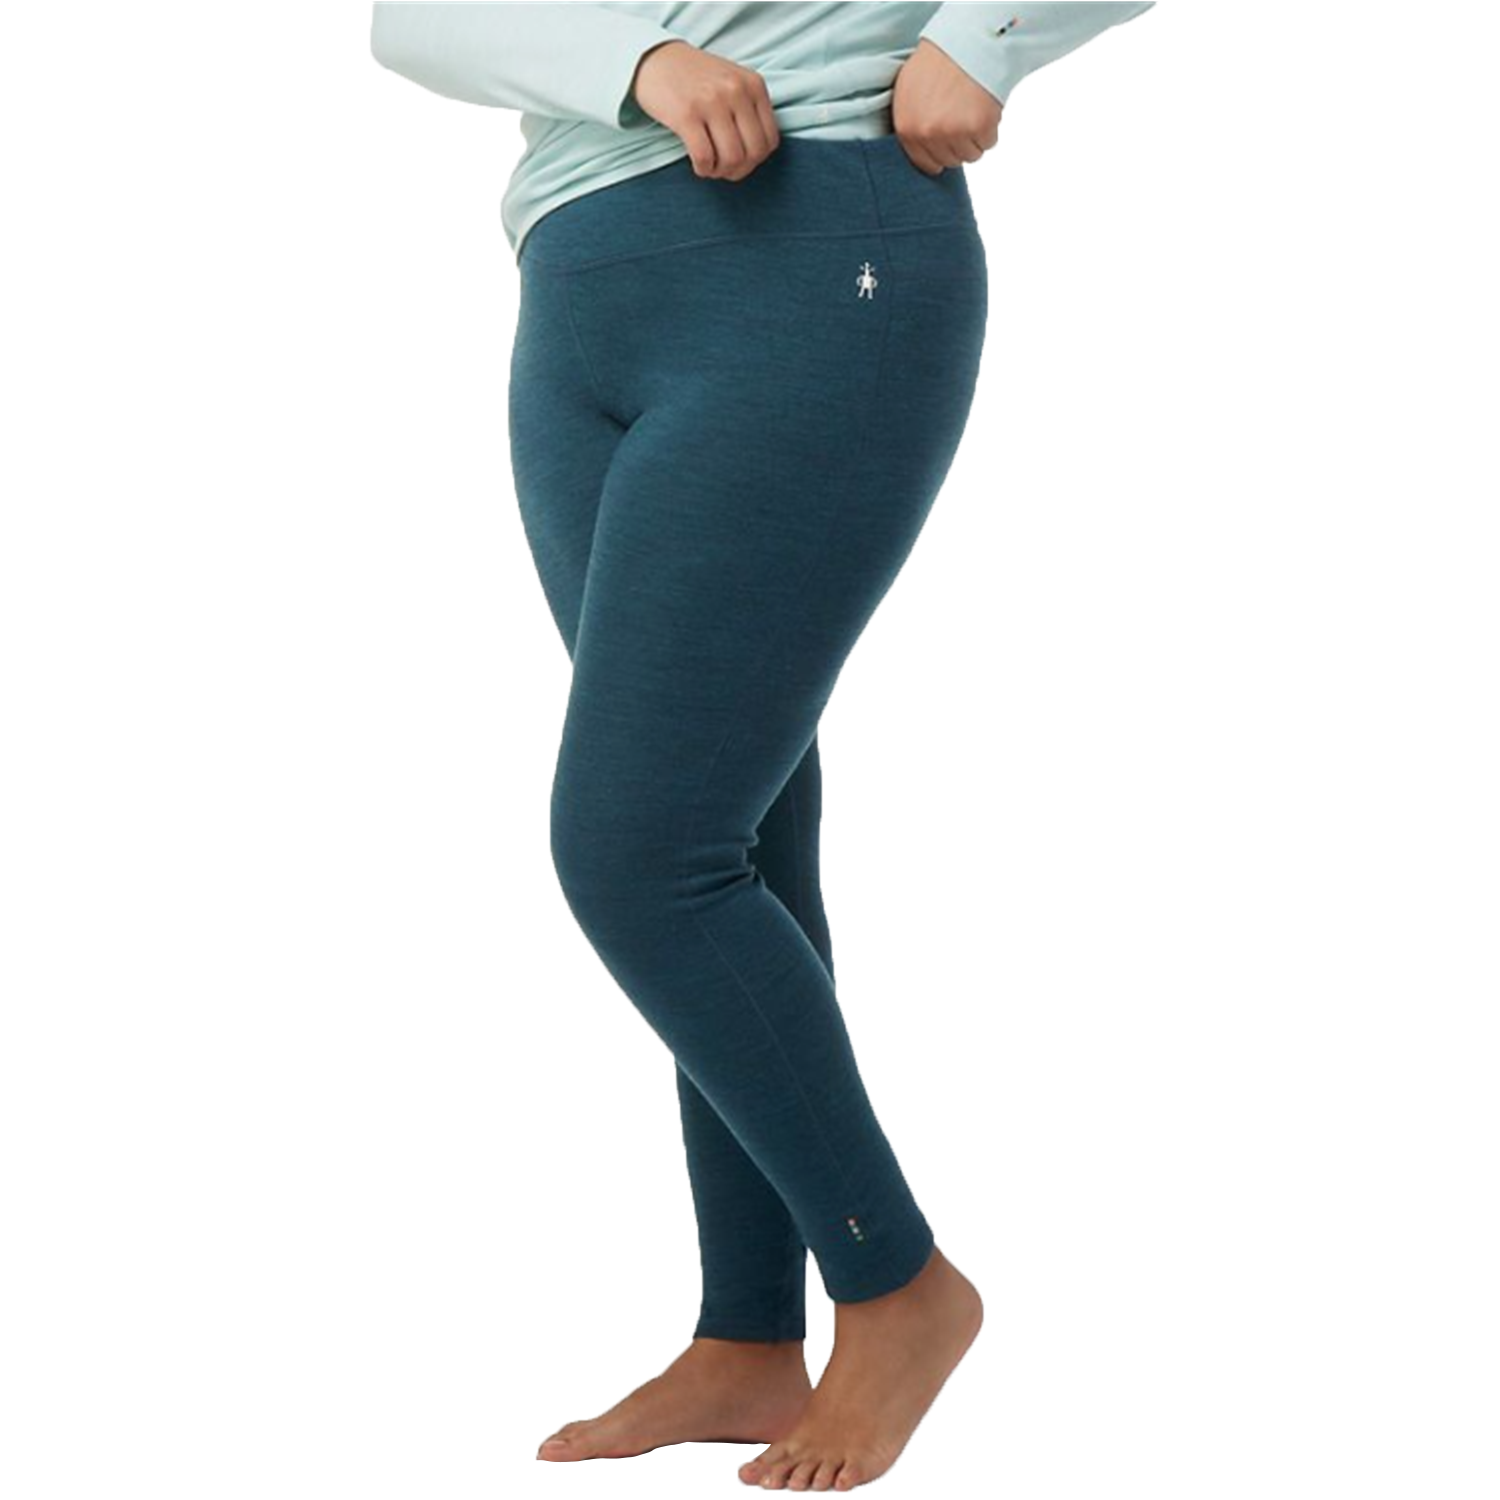 Women's Merino Wool Pants - Base Layer Leggings Burgundy, Bottom, Underwear, Thermal, Lightweight